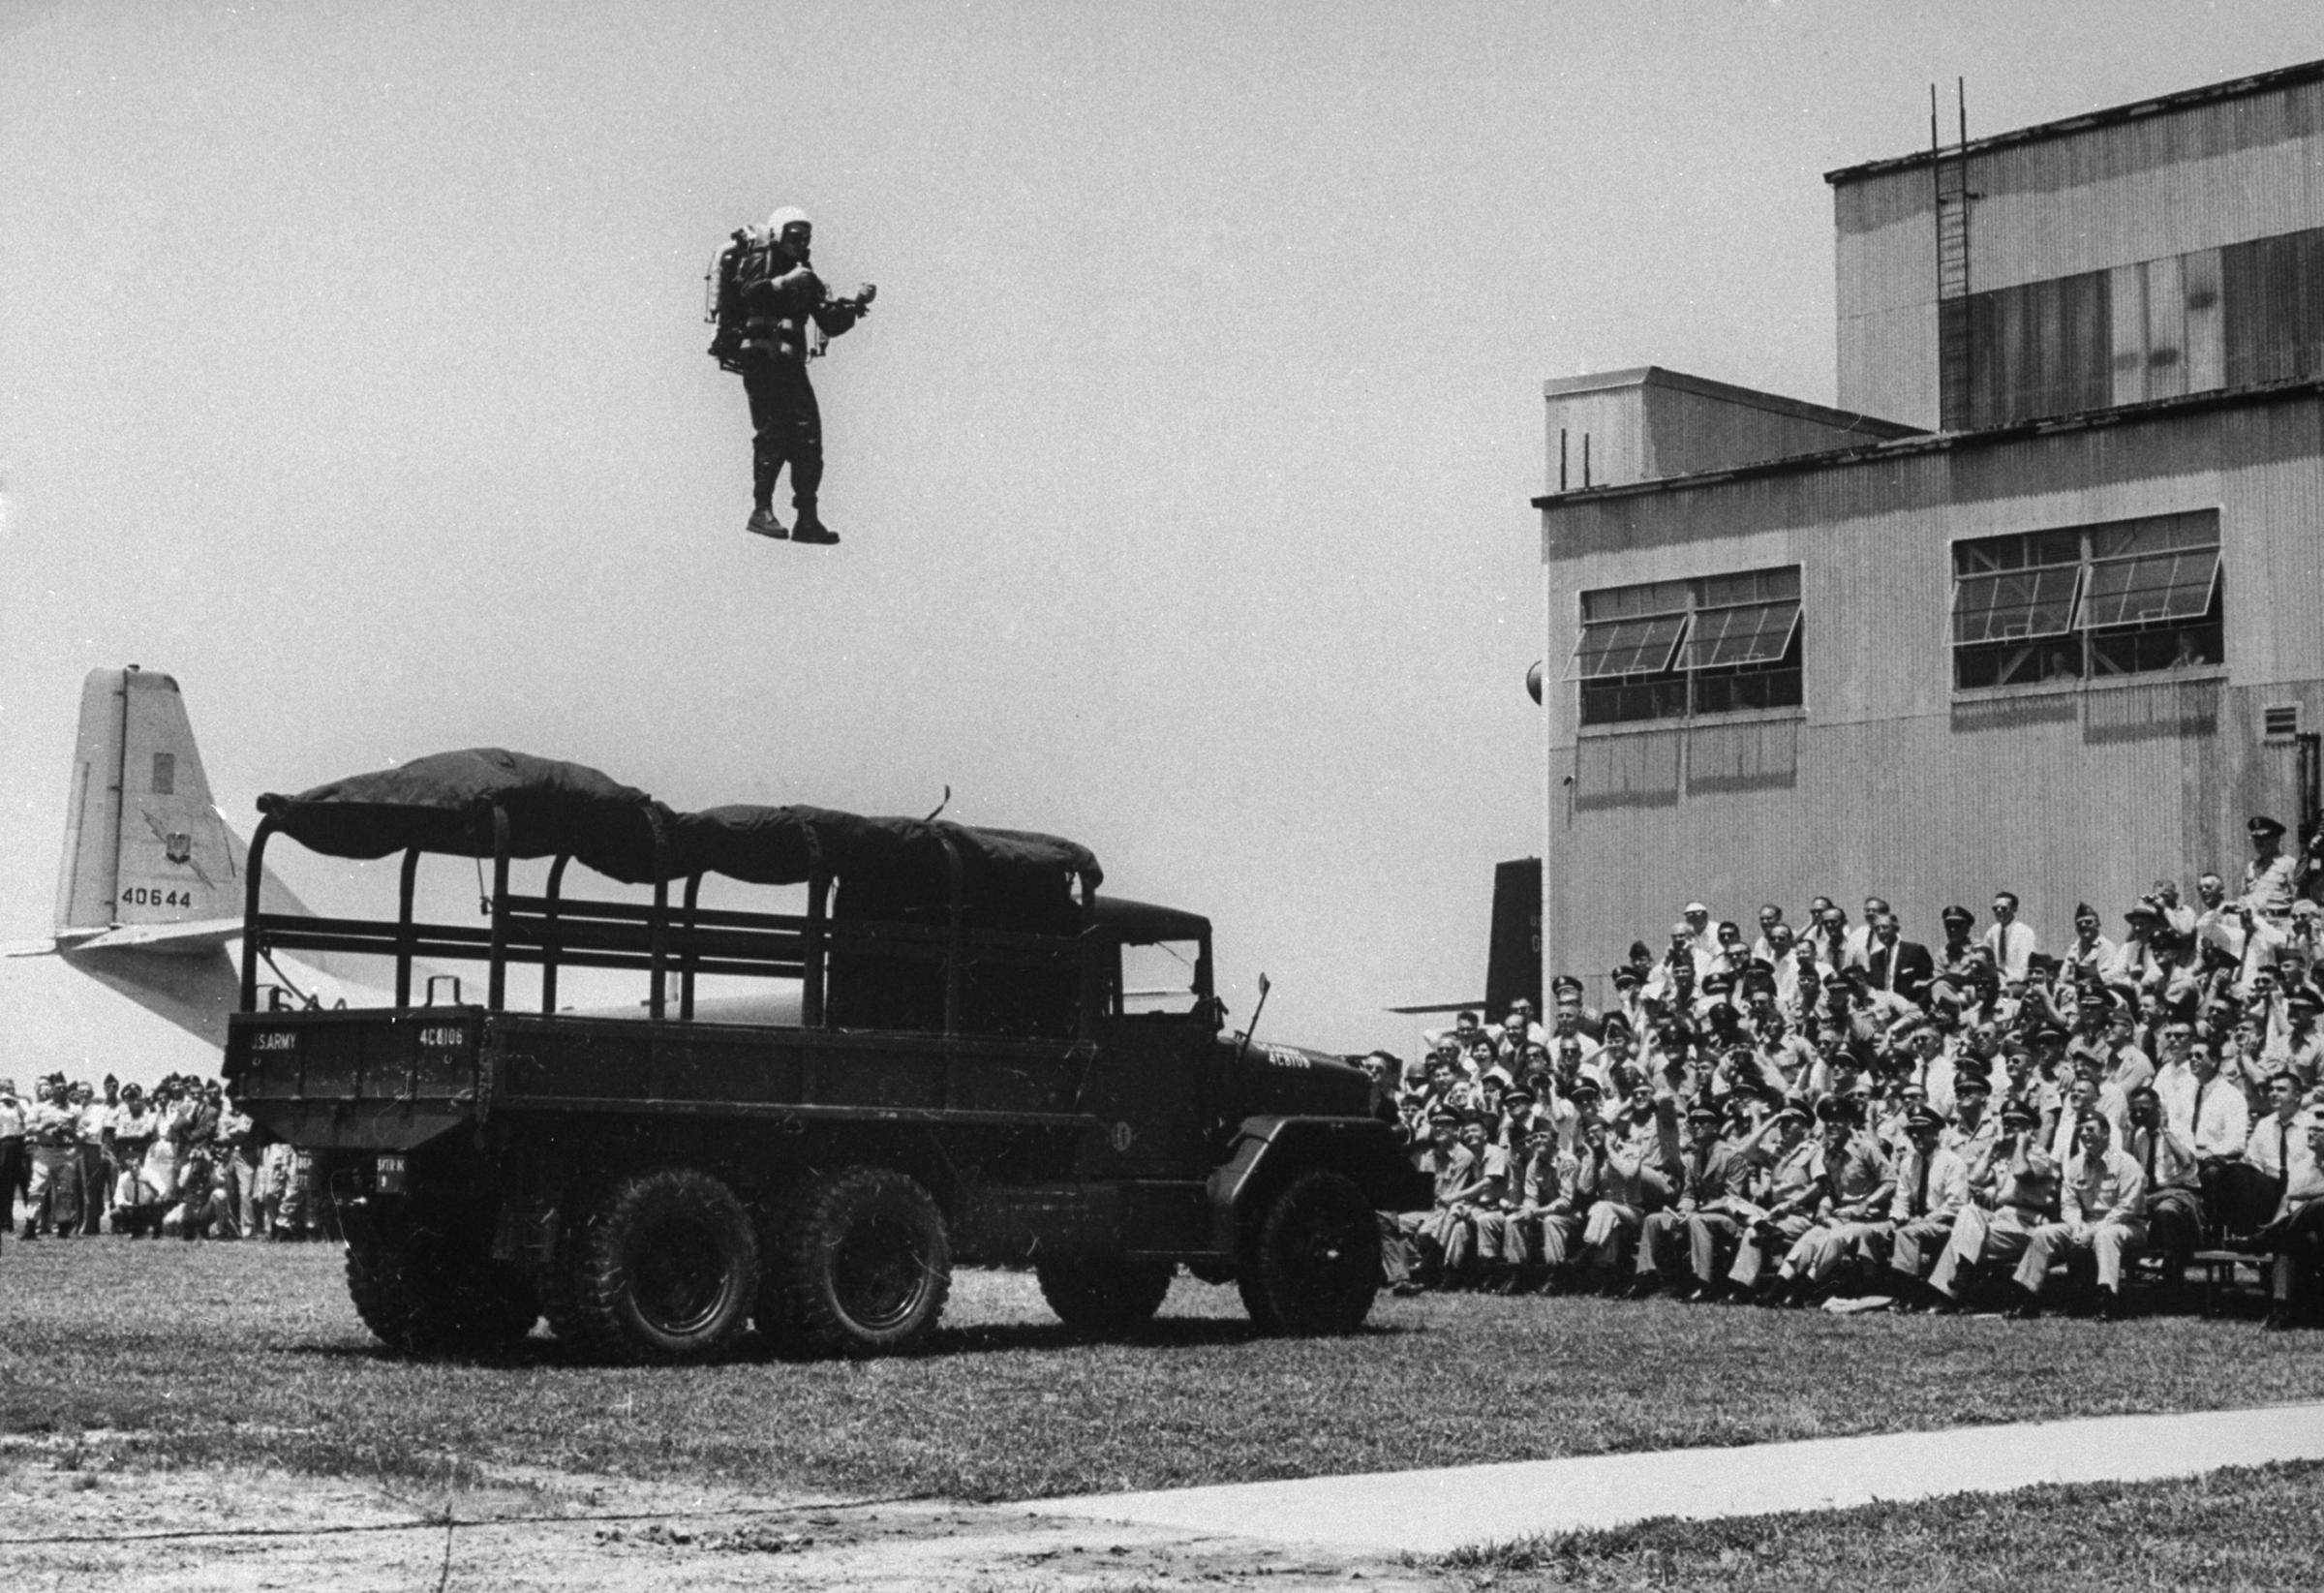 Bell engineer Harold Graham demonstrating the "Rocket Belt" at Fort Bragg in 1961.